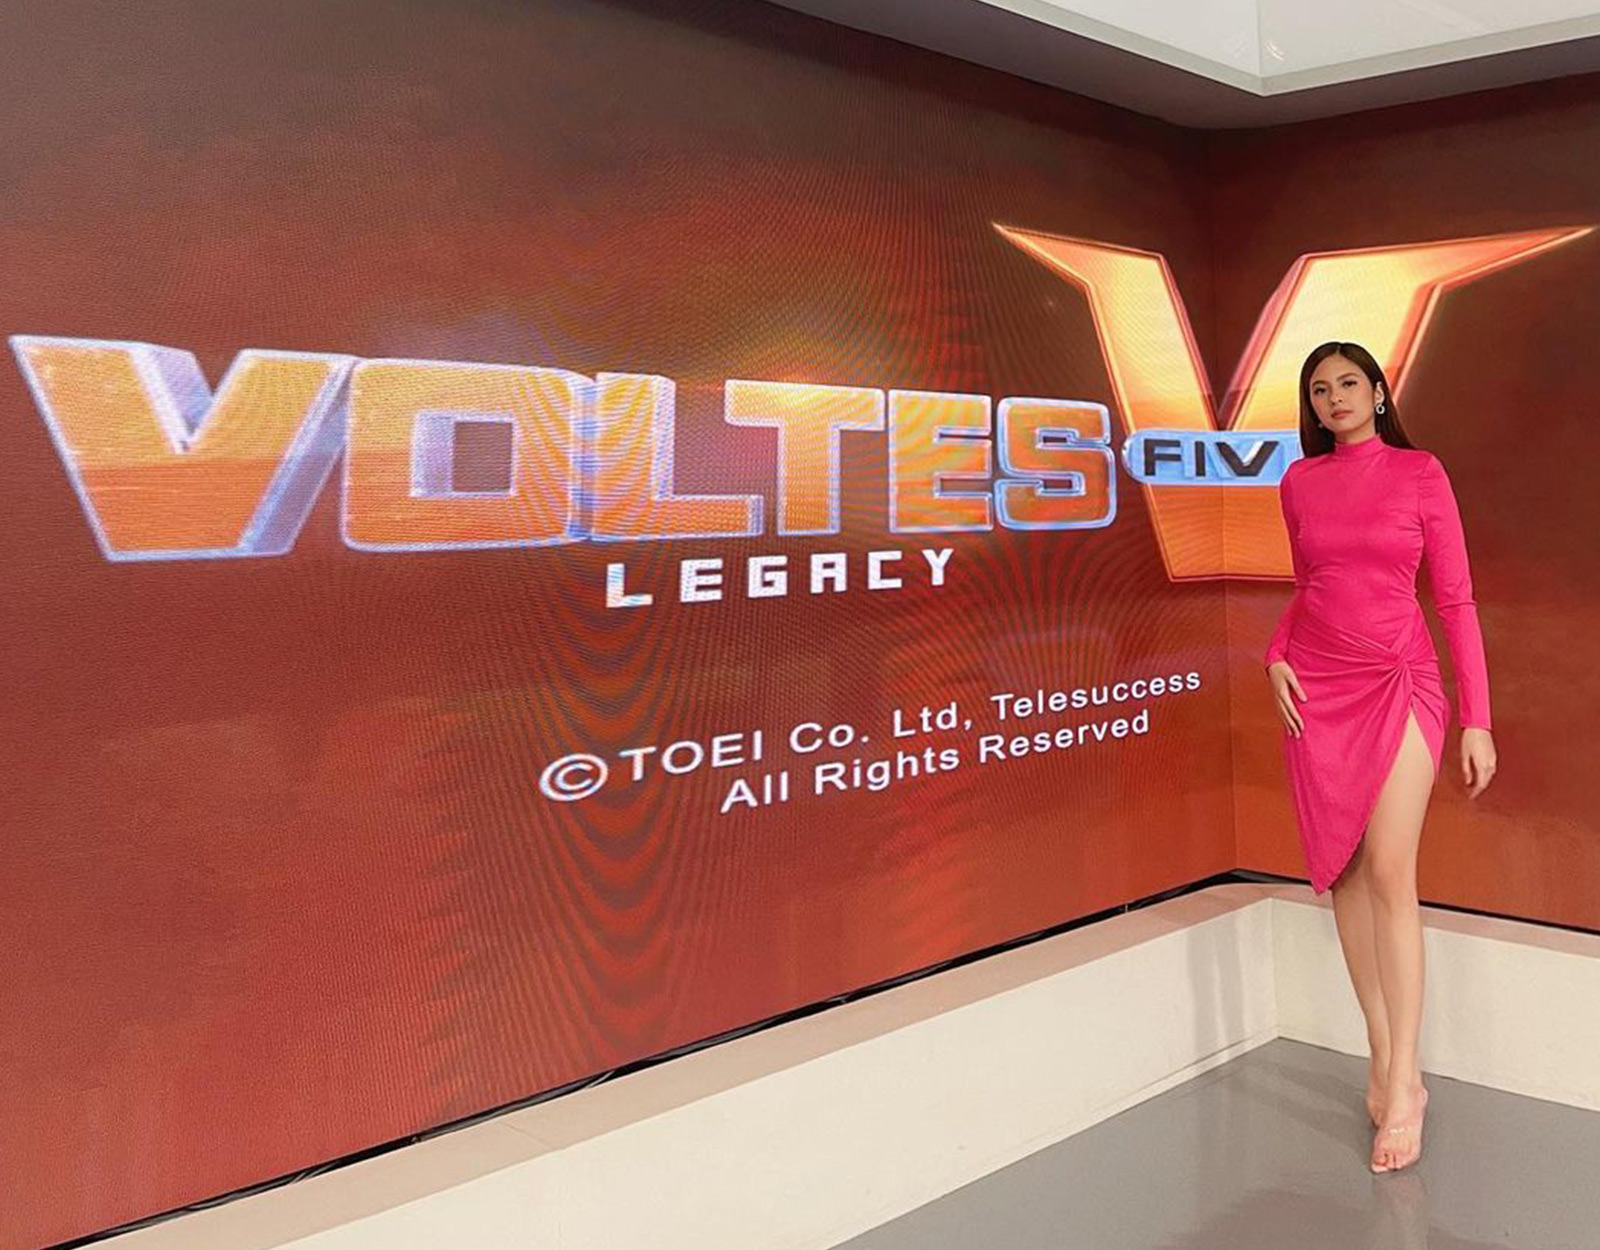 Ysabel Ortega as Jamie Robinson in Voltes V: Legacy